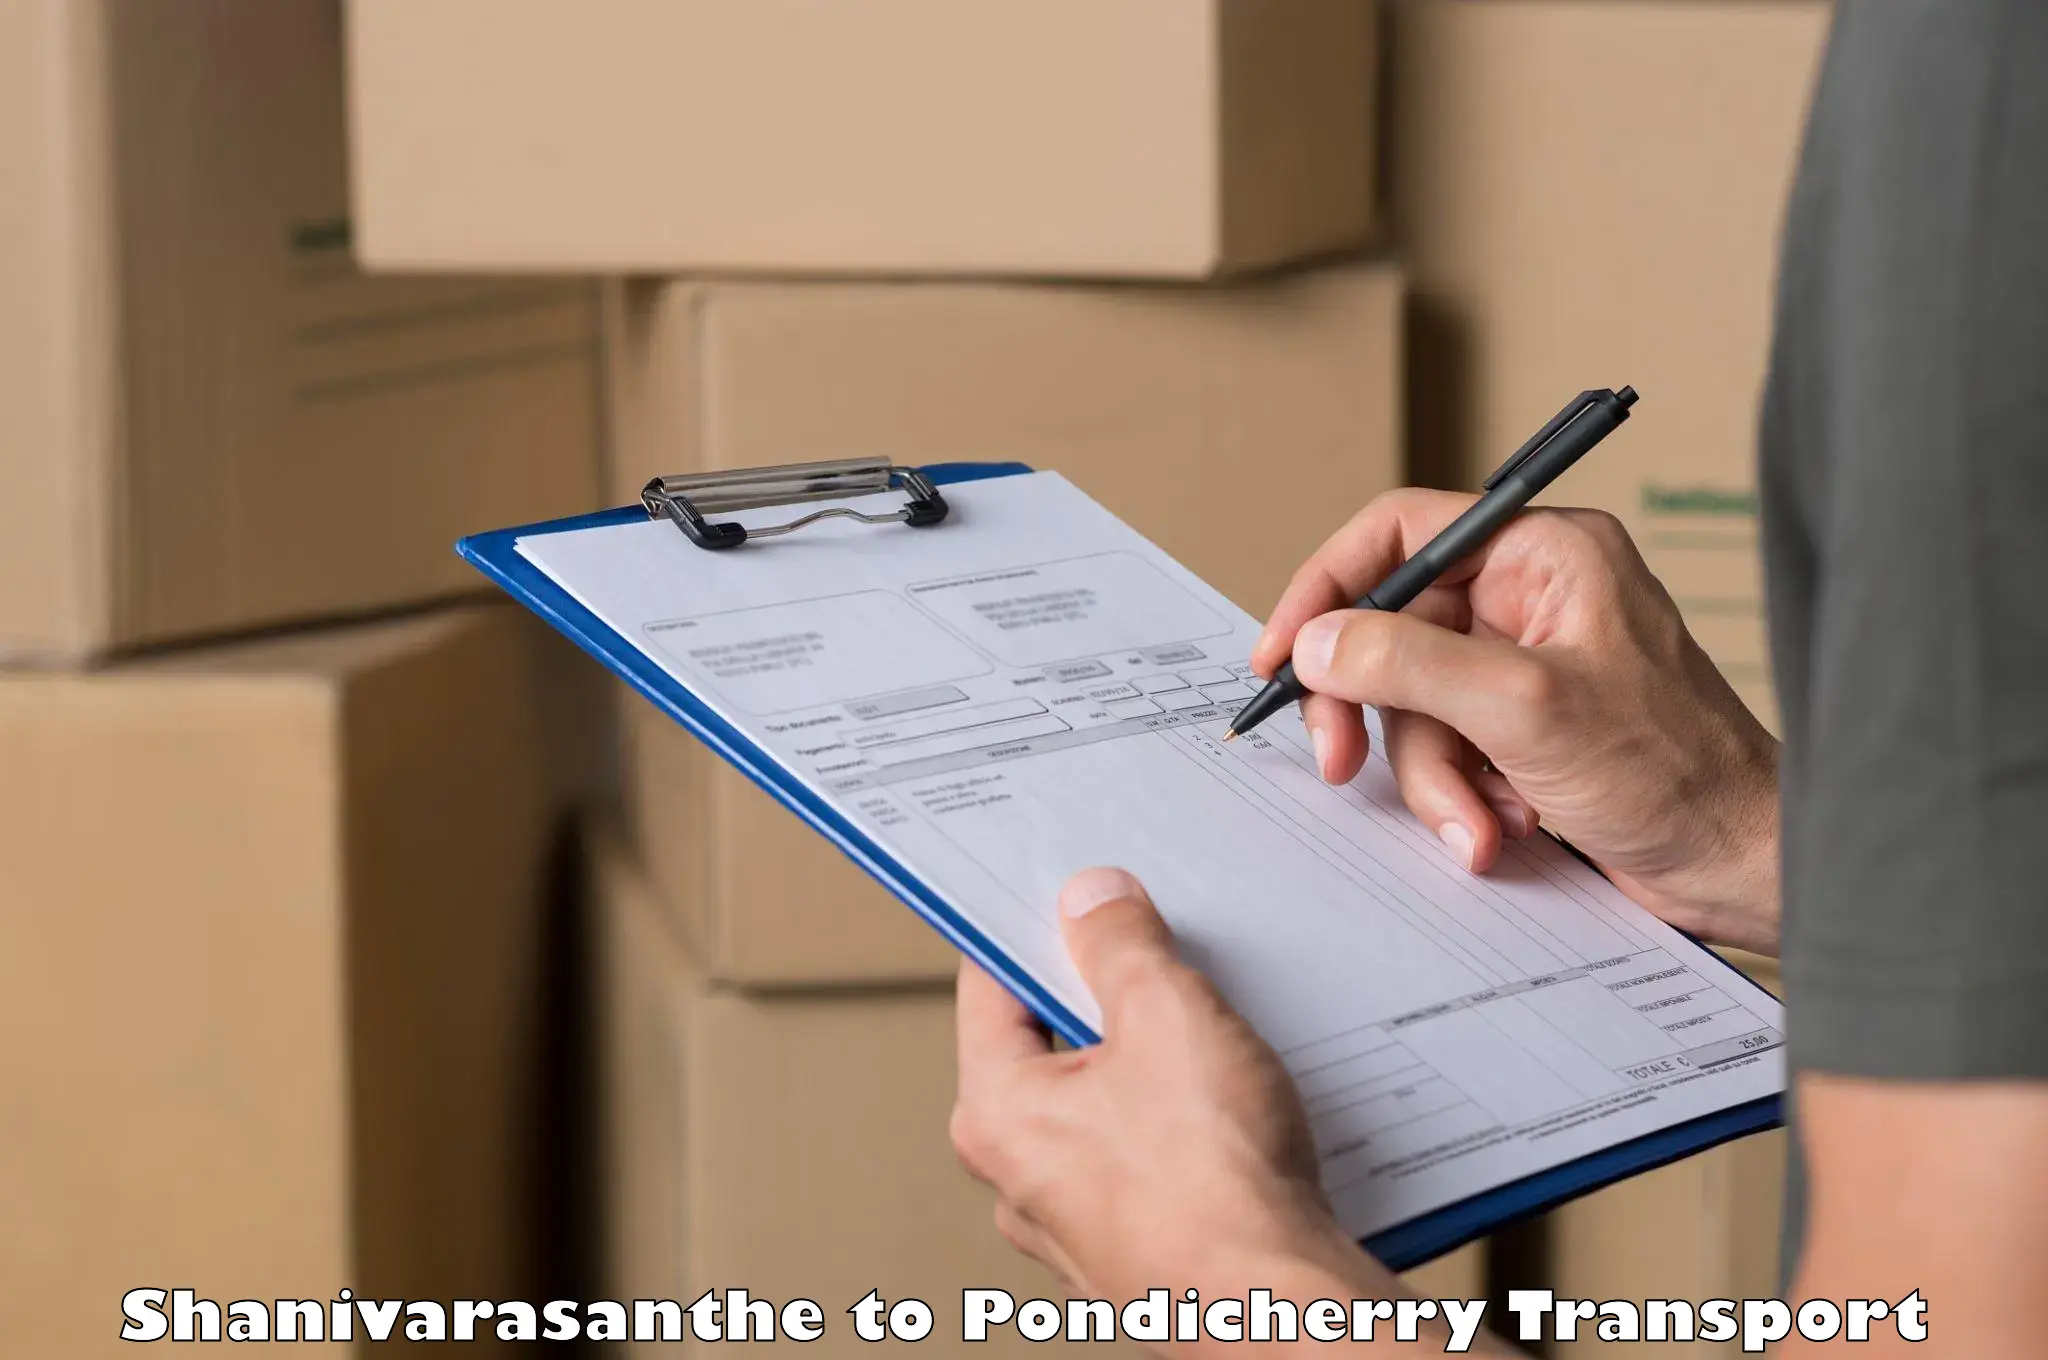 Container transport service Shanivarasanthe to Pondicherry